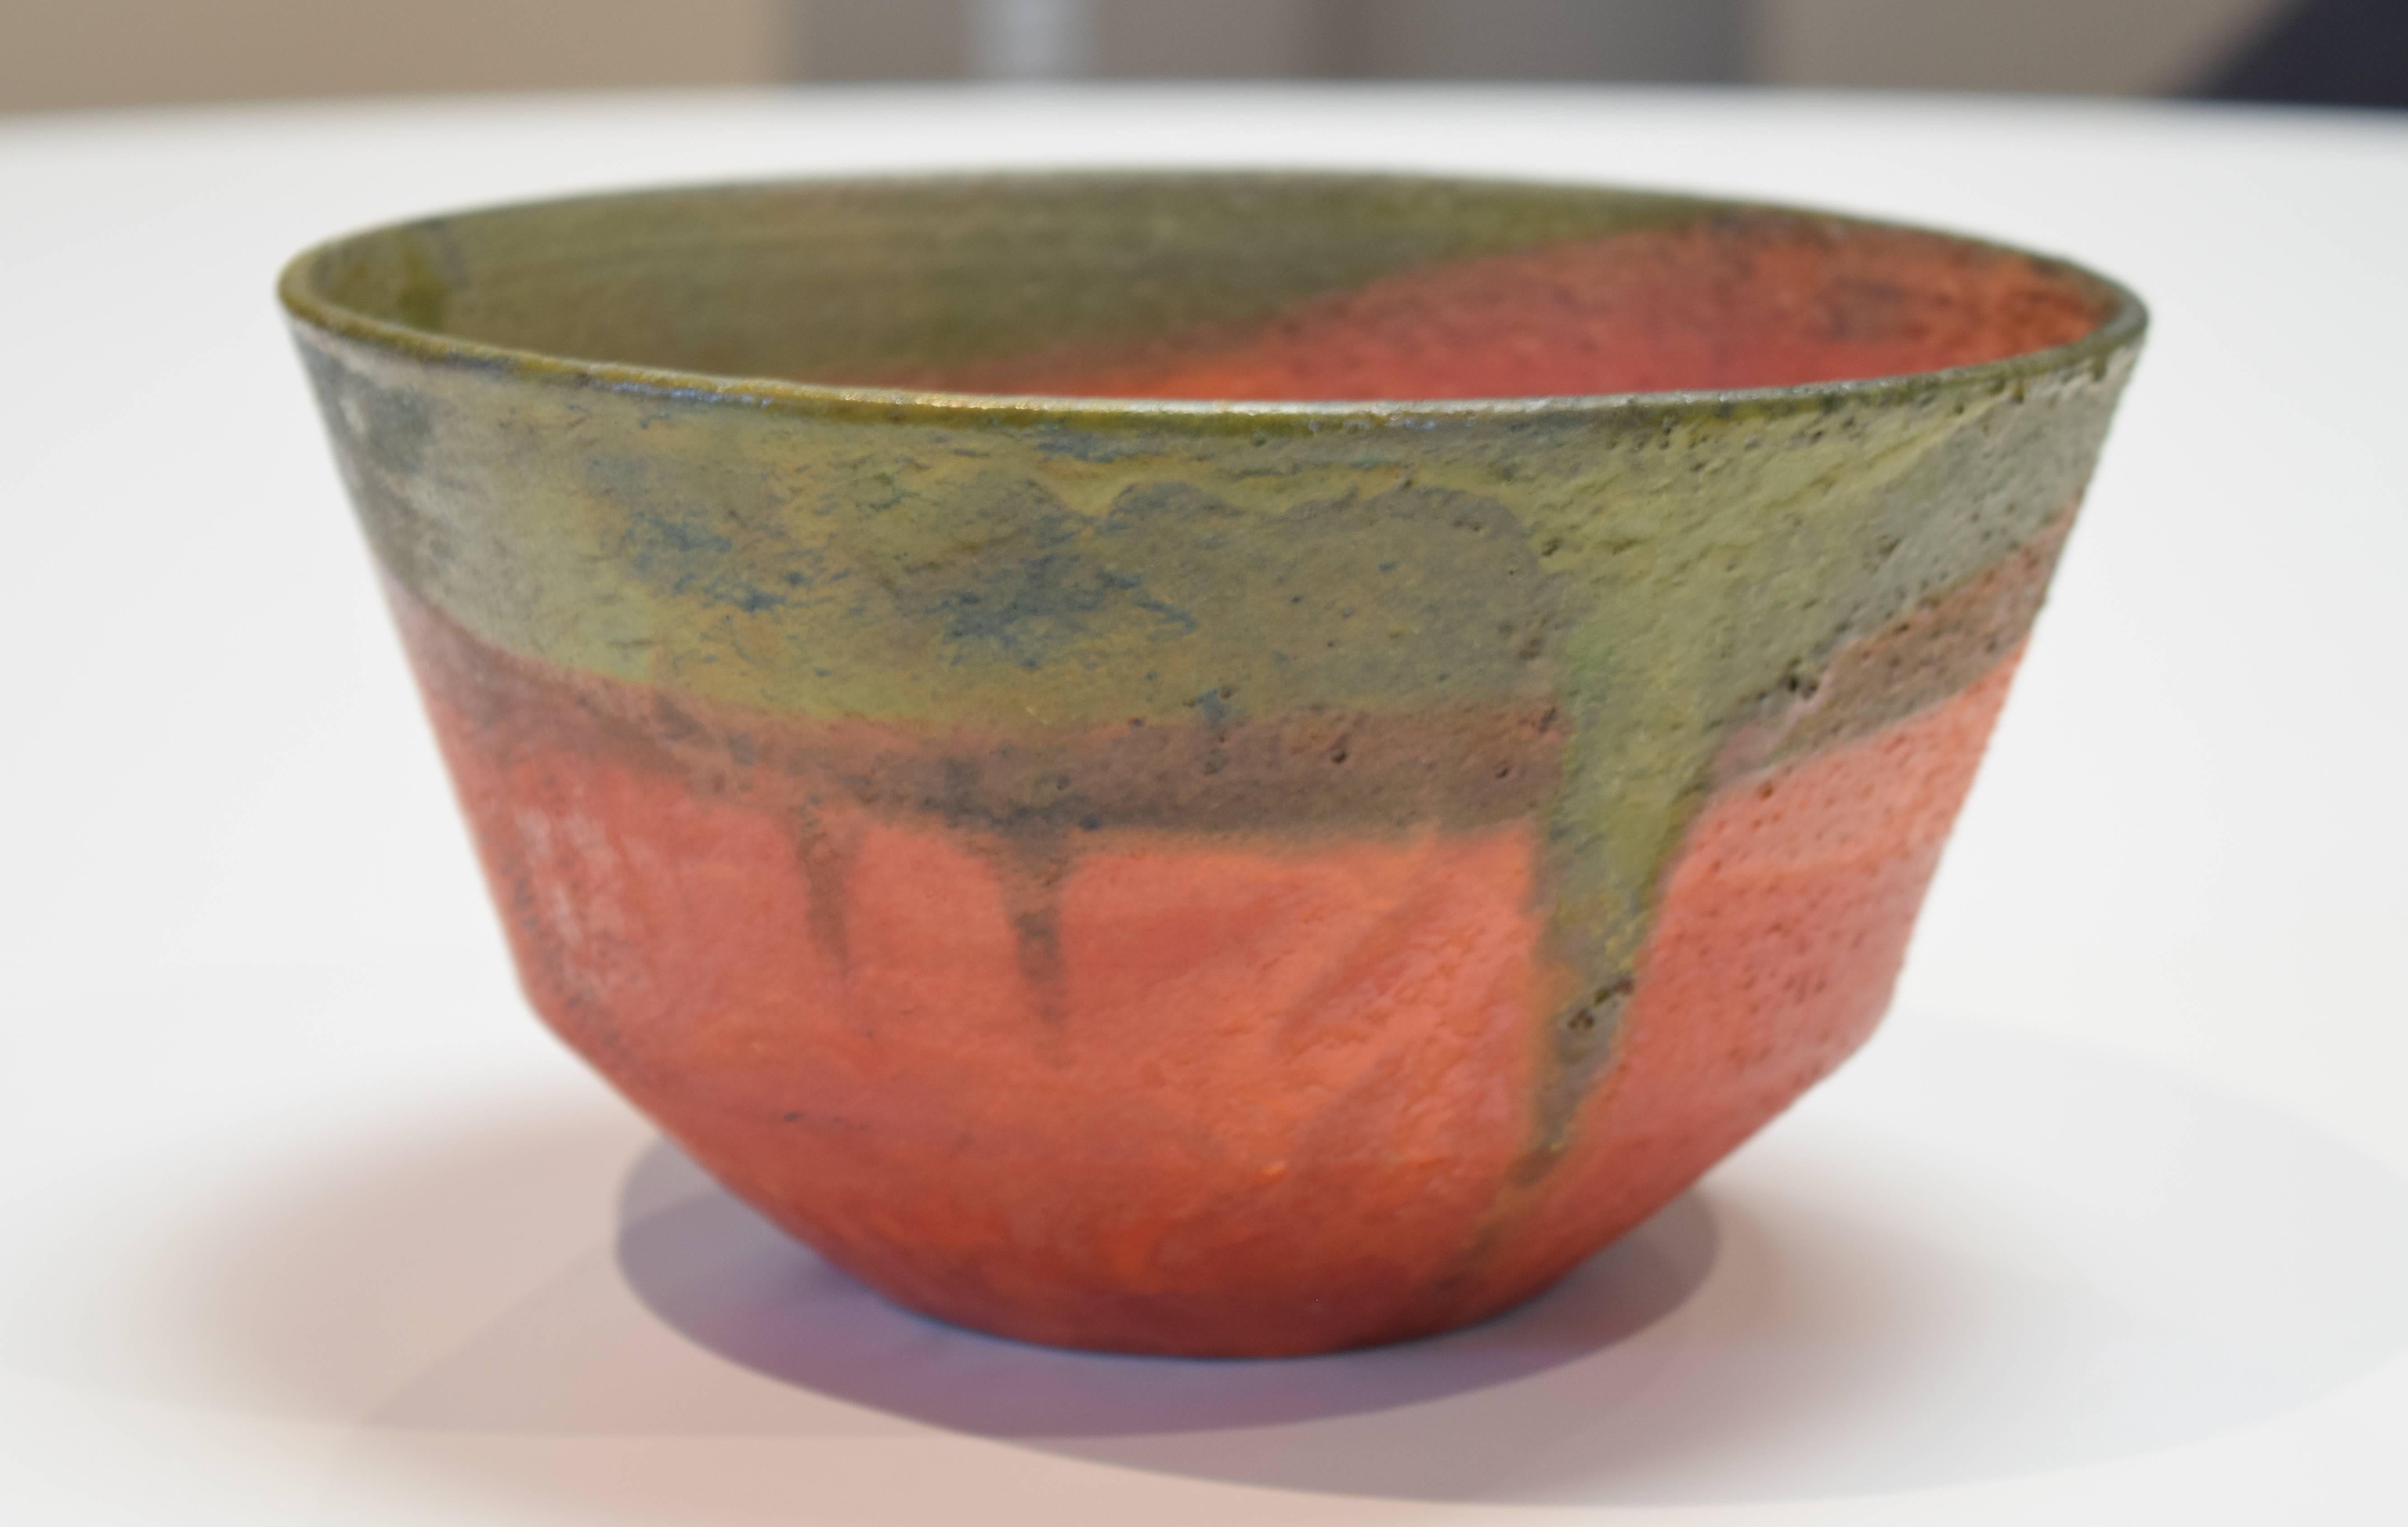 Striking ceramic bowl by the mid-century master. Signed Fantoni ITALY to base.